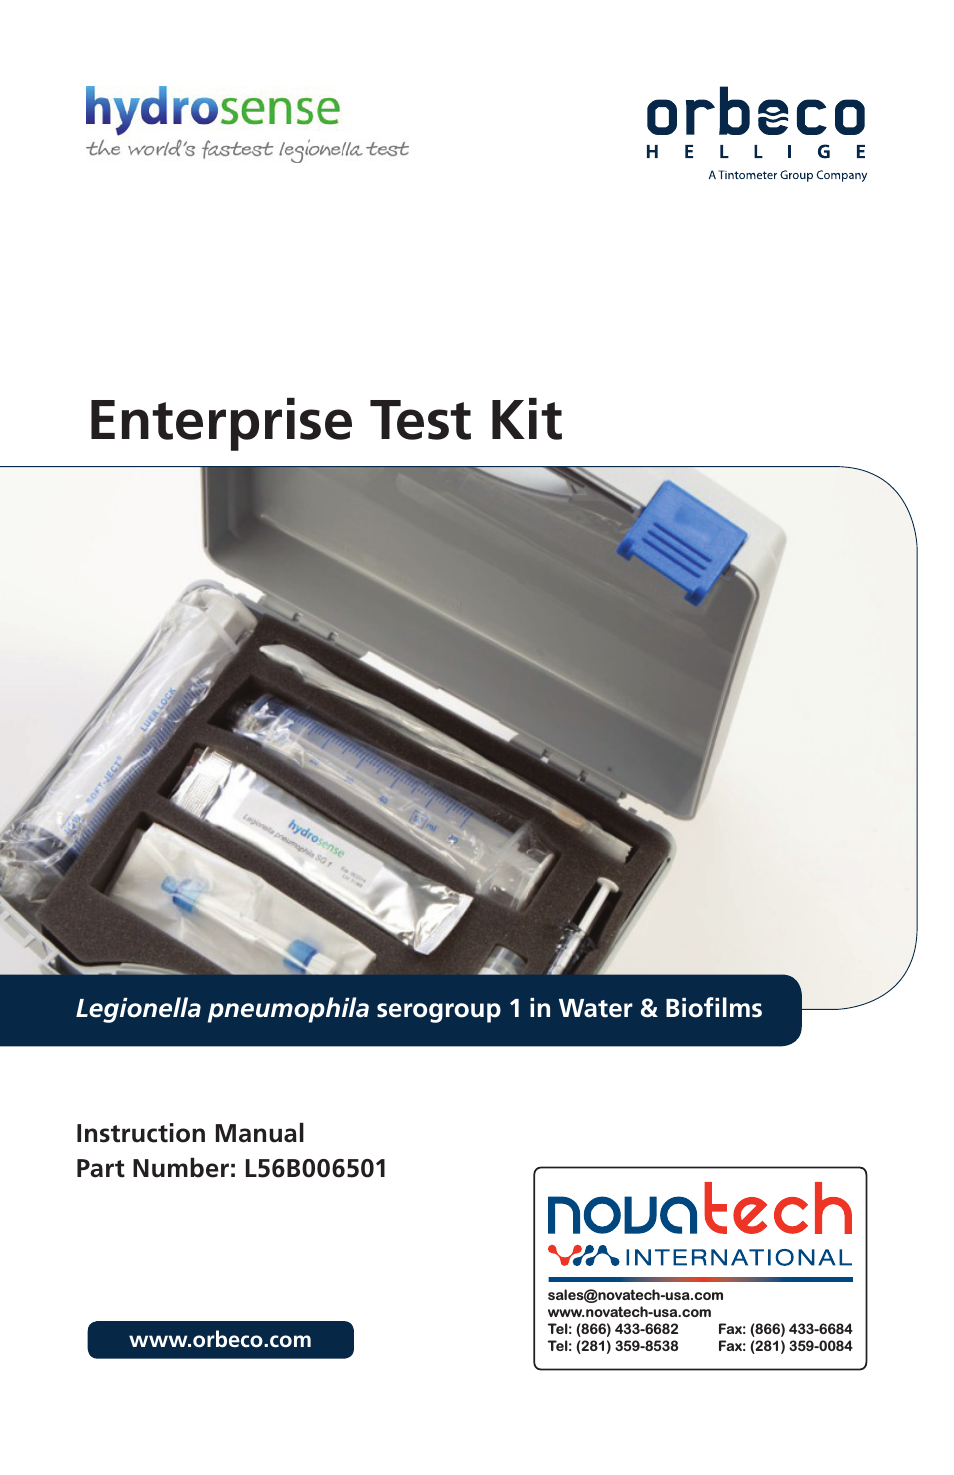 Orbeco-Hellige Legionella Enterprise Test Kit